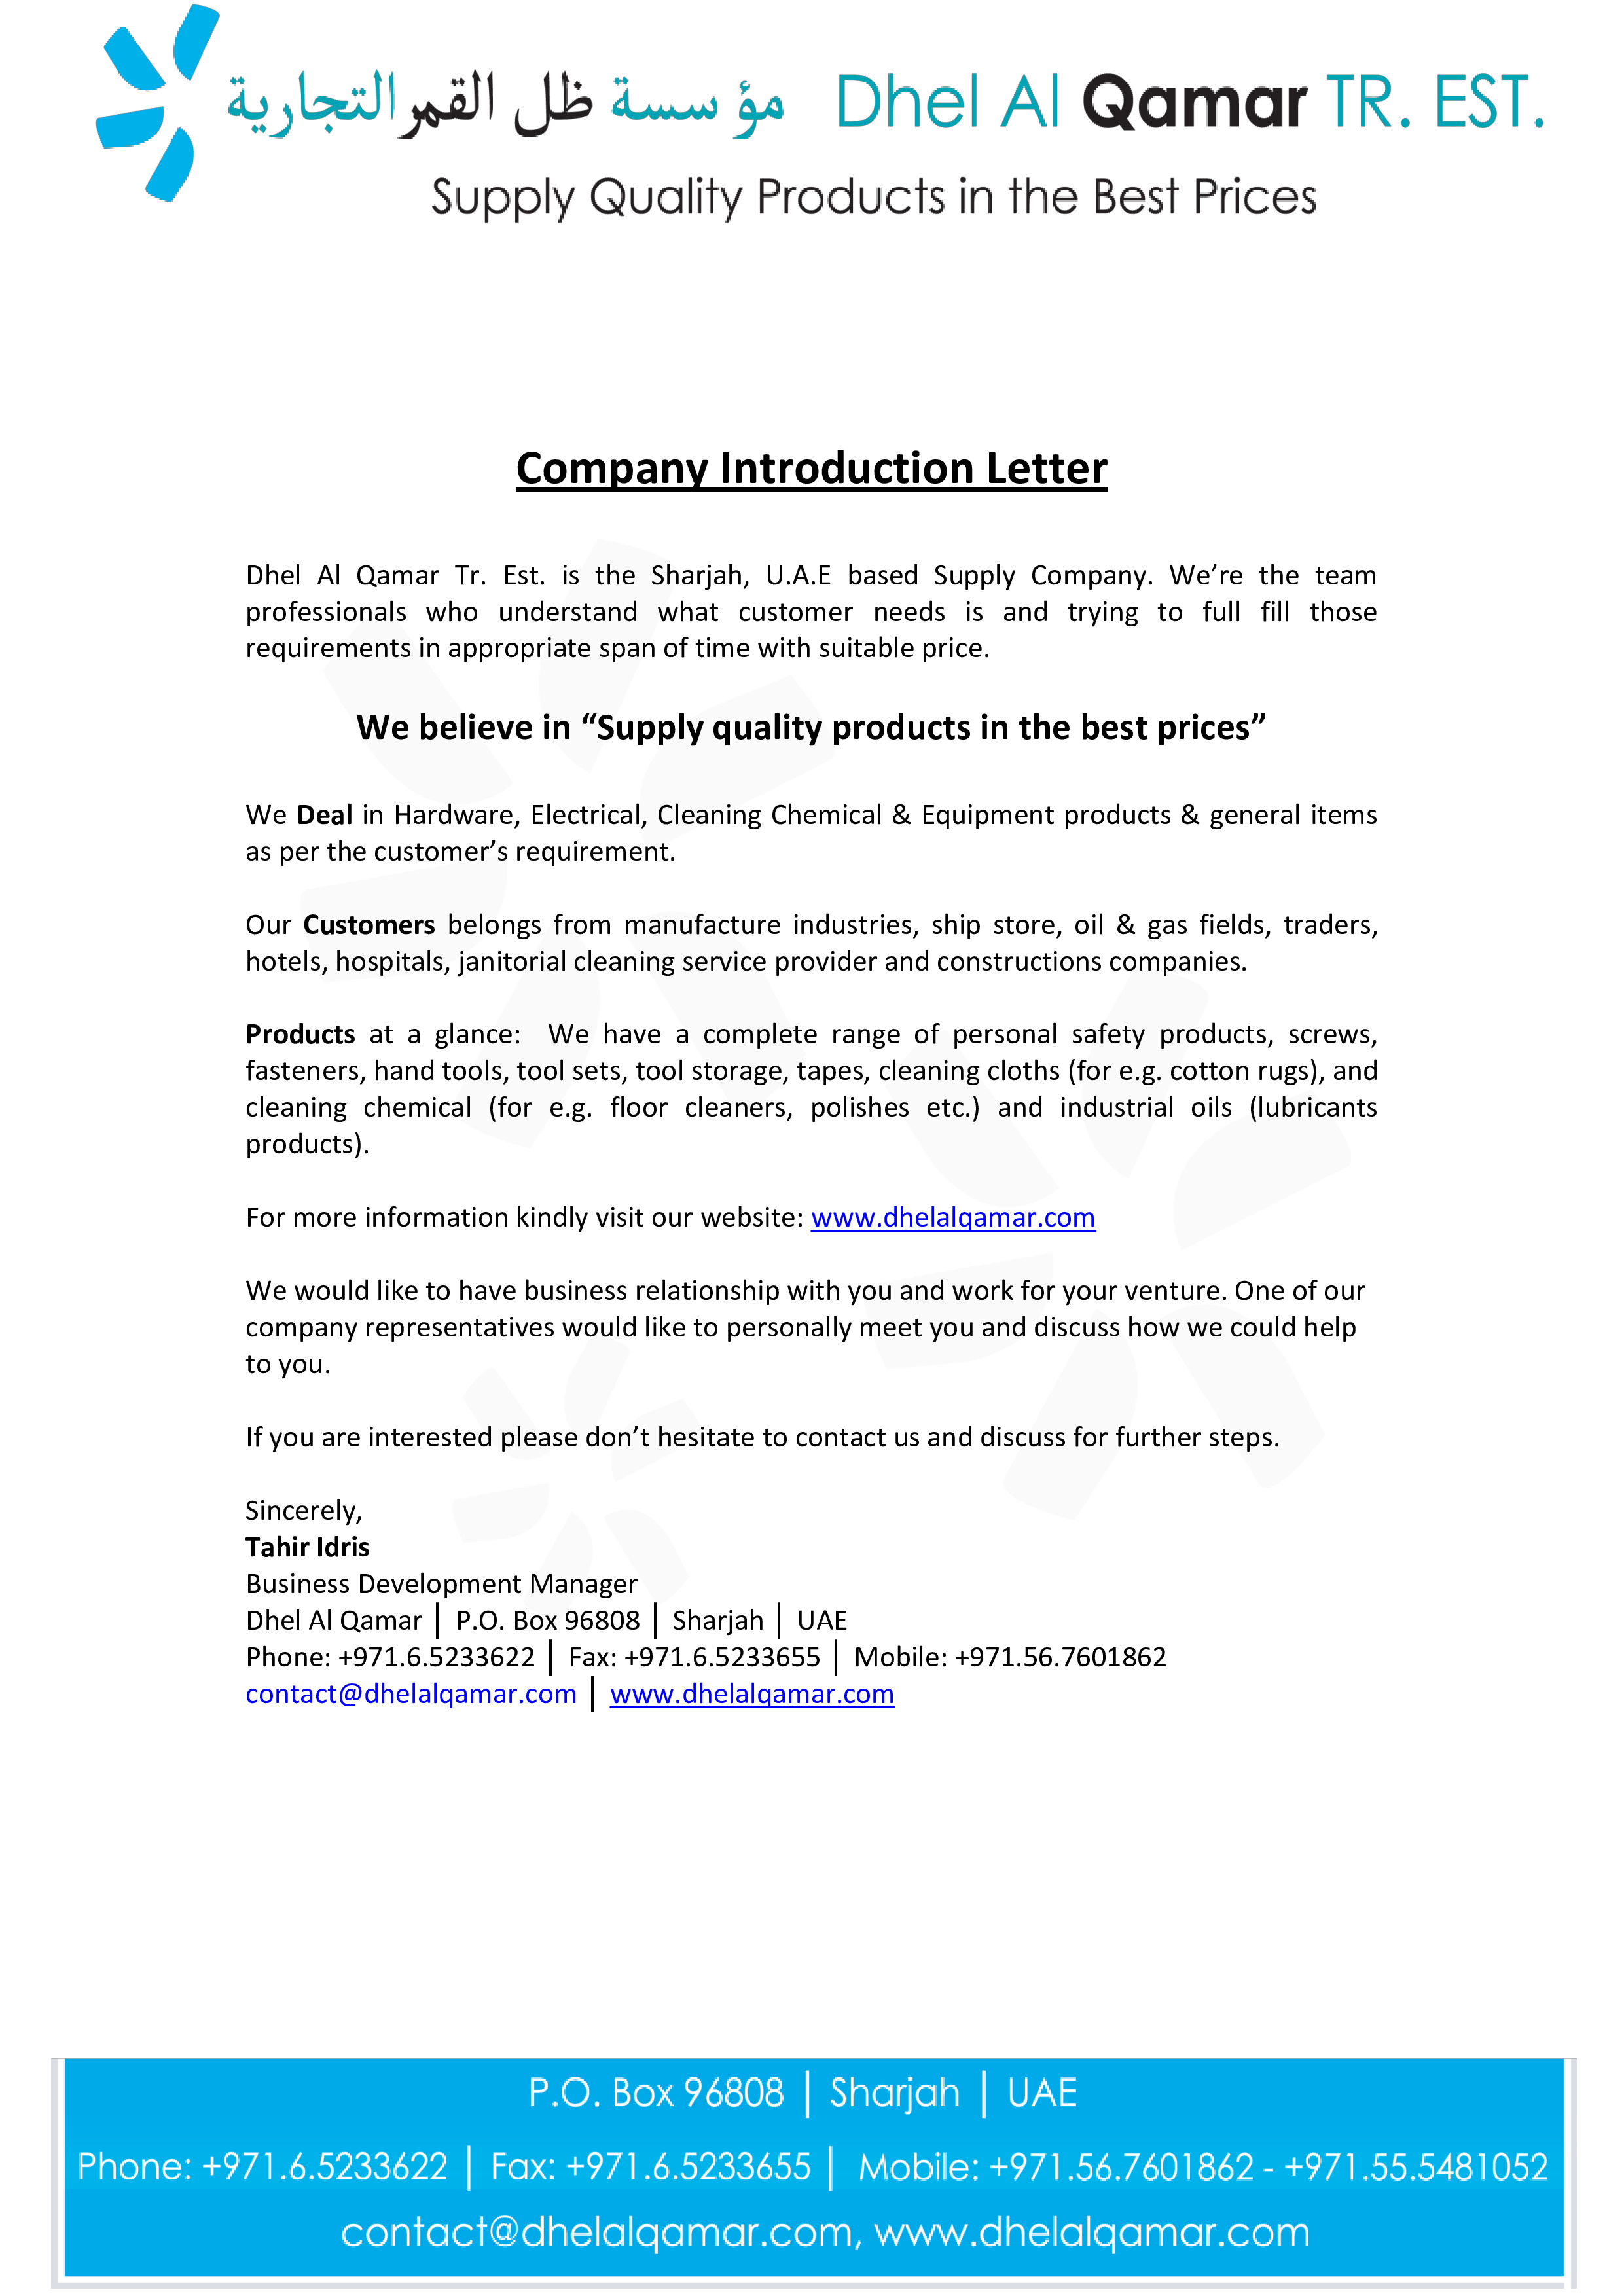 company introduction formal letter voorbeeld afbeelding 